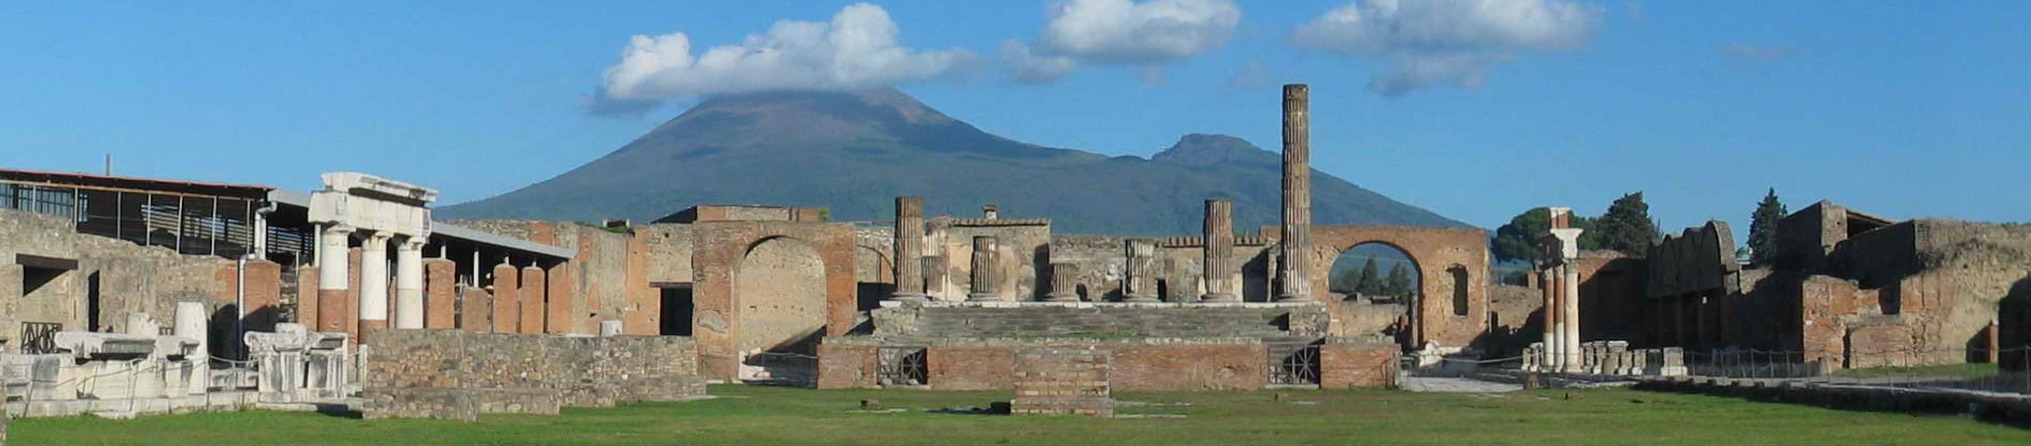 The forum at Pompeii with Mt. Vesuvius in the background